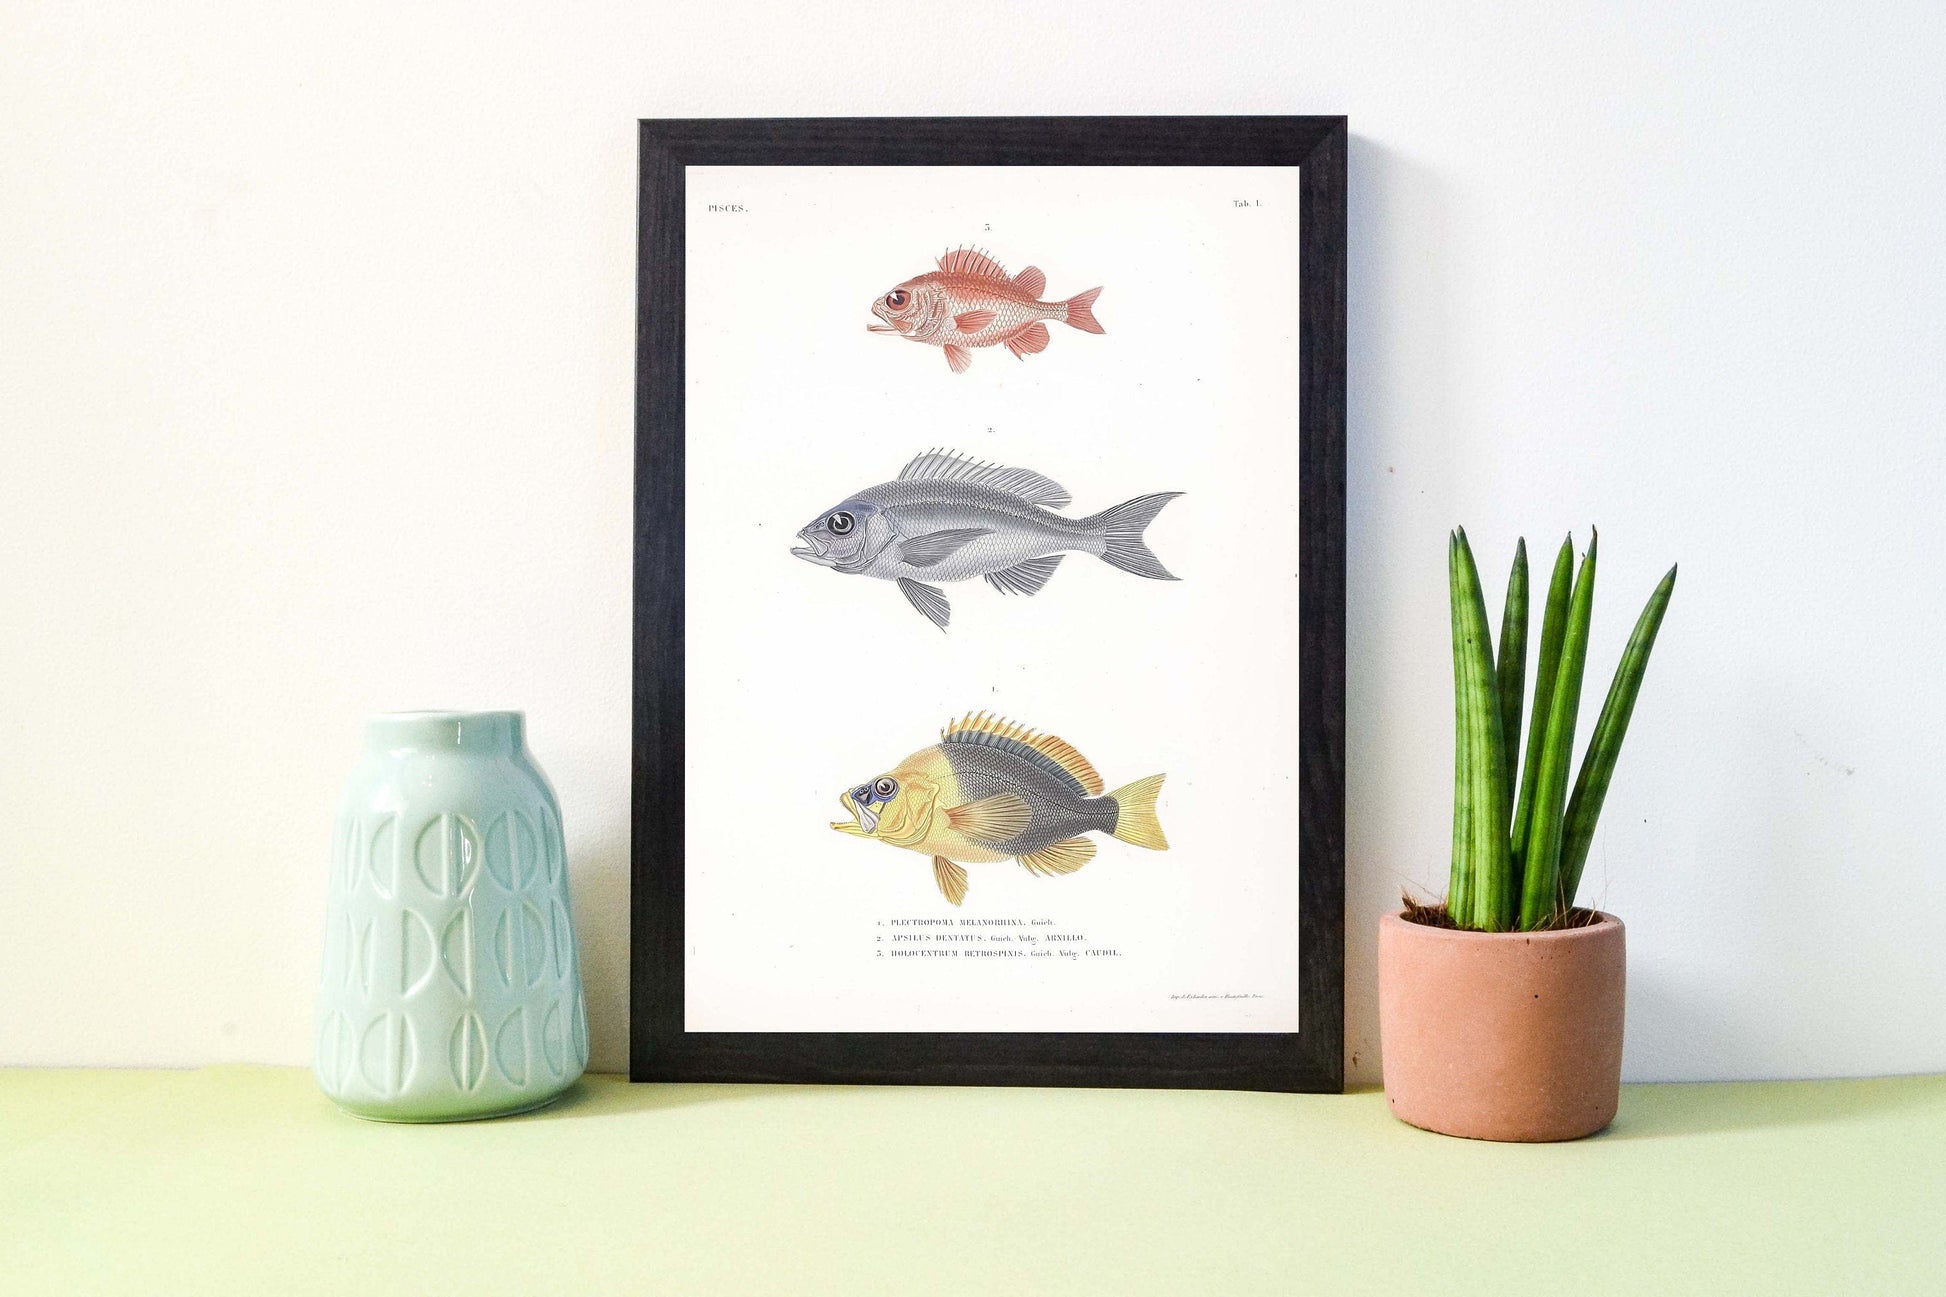 Framed Antique Fish Print, Scientific biology fish illustration Poster Wall Art, vintage tropical fish Print Vintage Animal Prints